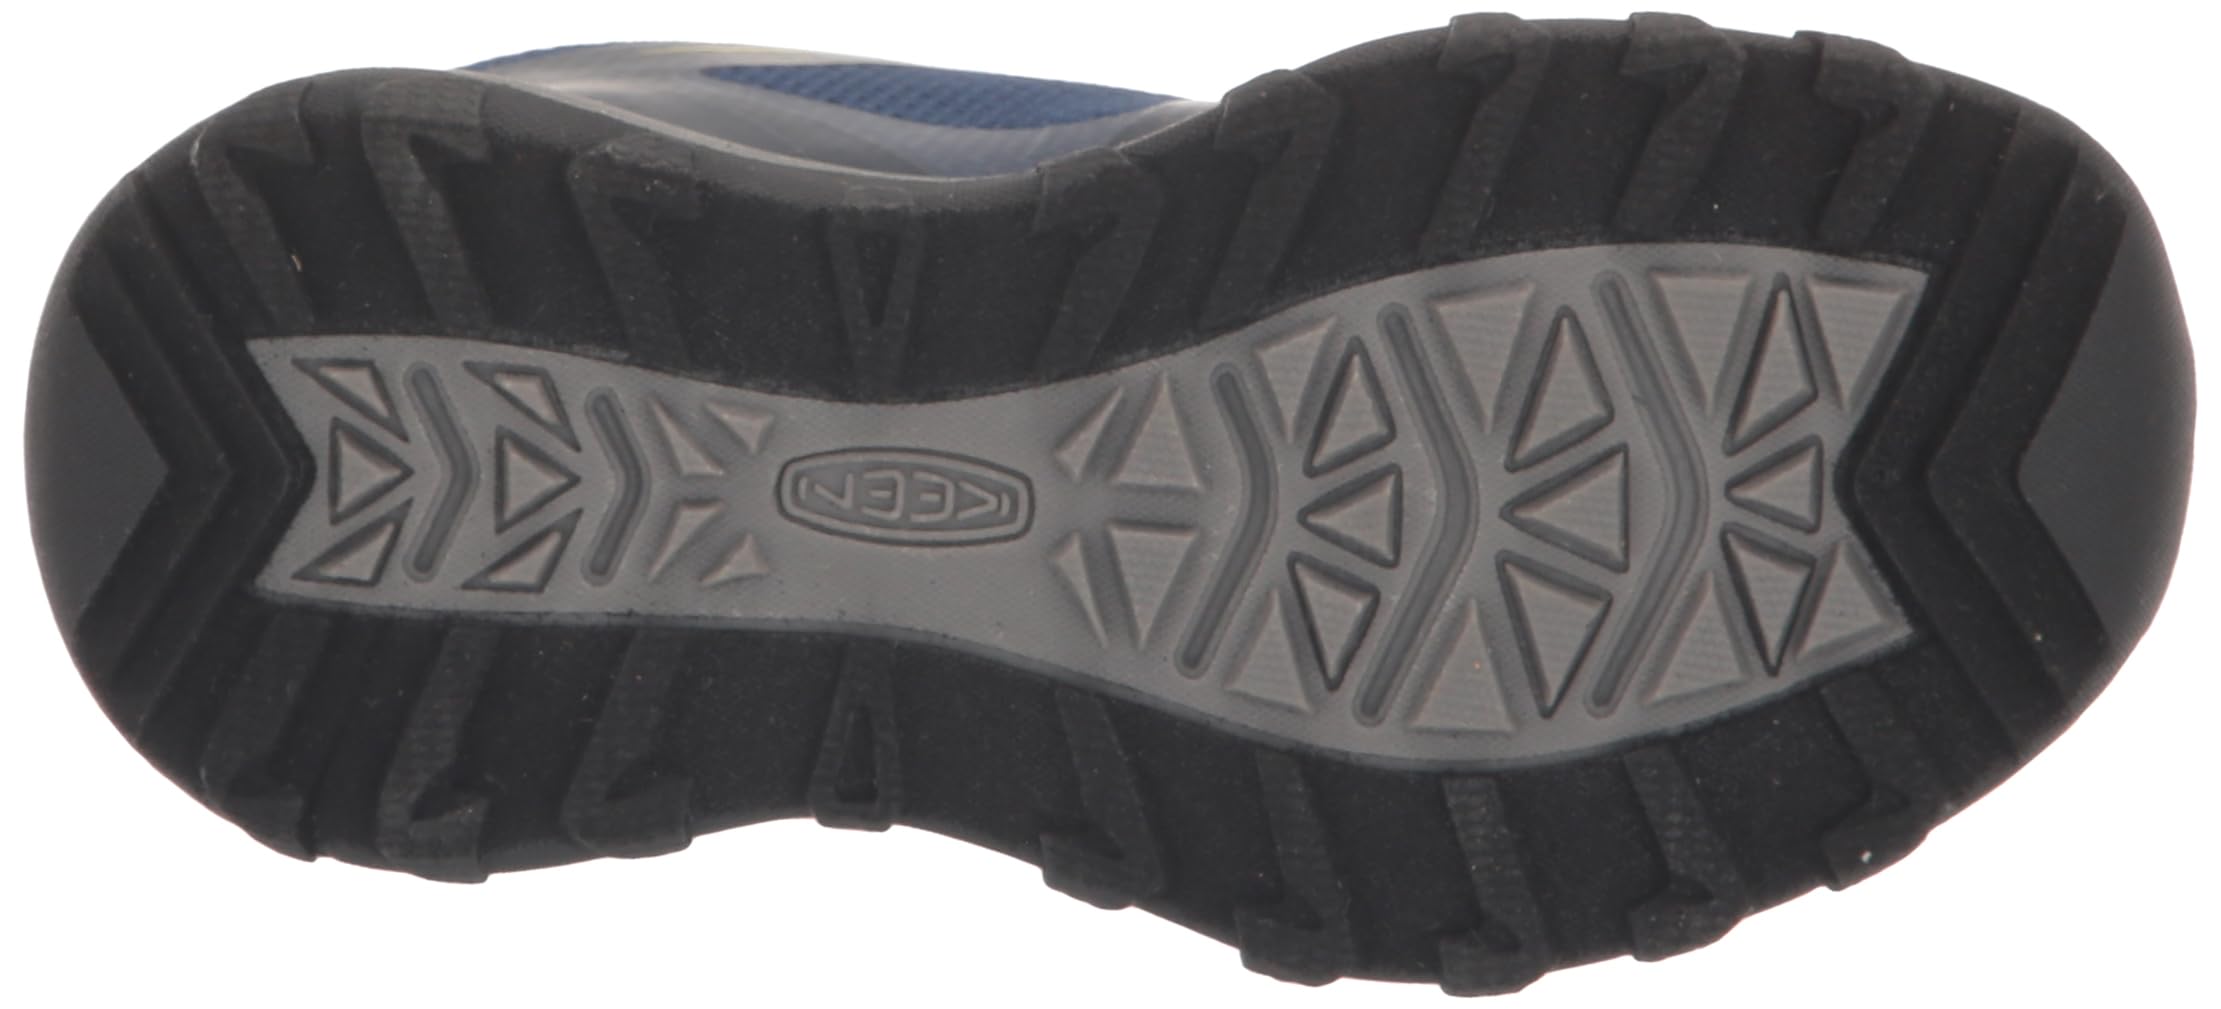 KEEN Unisex-Child Wanduro Low Height Waterproof Easy on Durable Hiking Sneakers